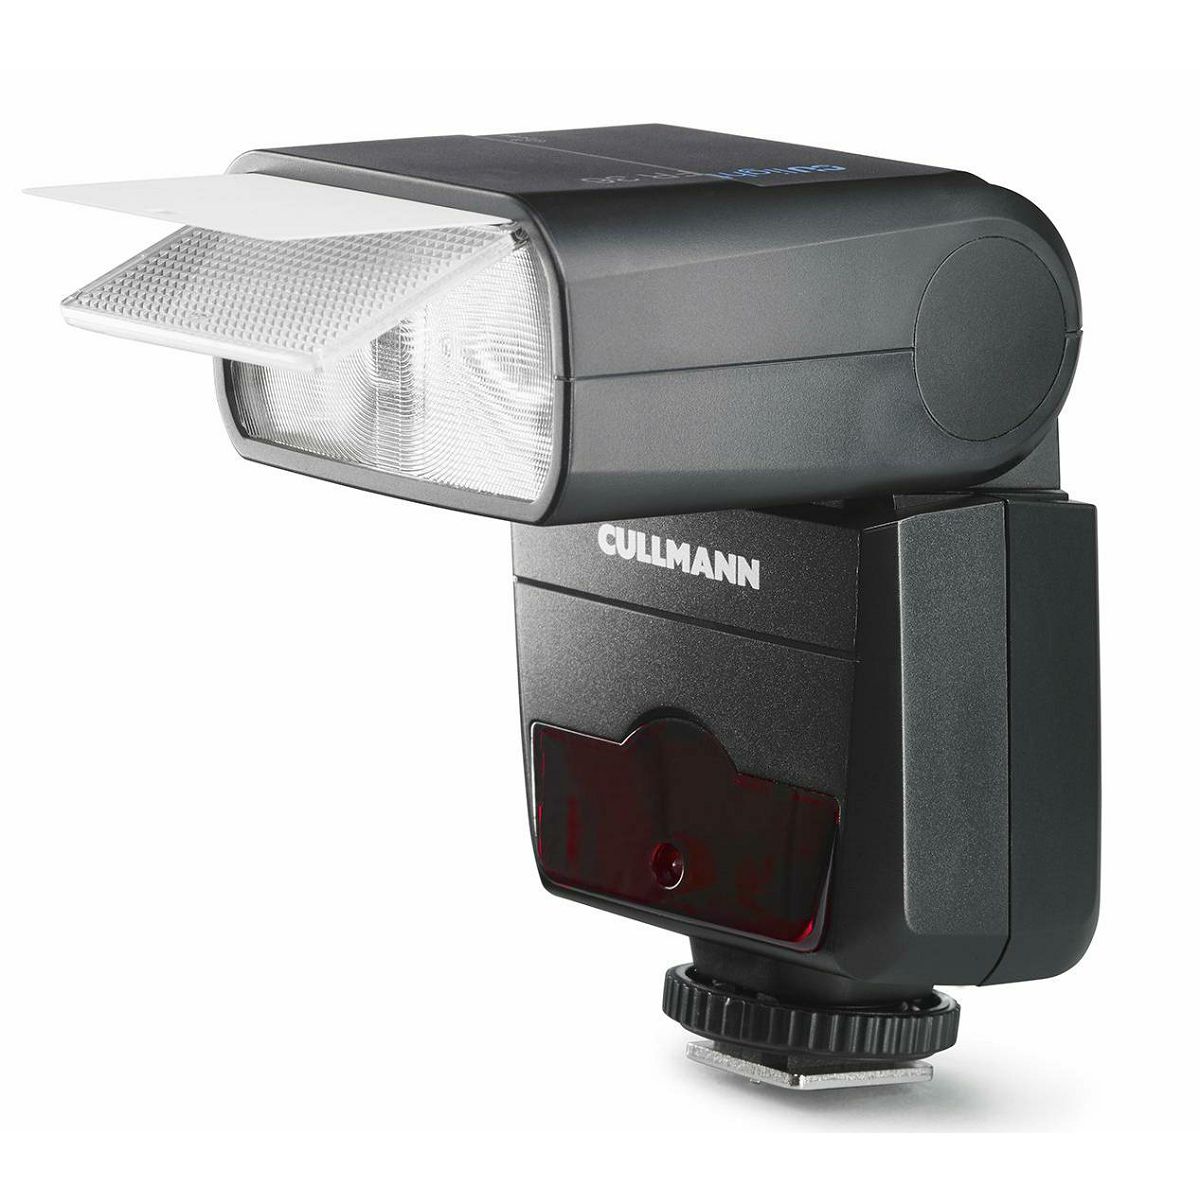 Cullmann CUlight FR 36MFT TTL HSS Flash unit bljeskalica za MFT Olympus Panasonic Leica (61140)